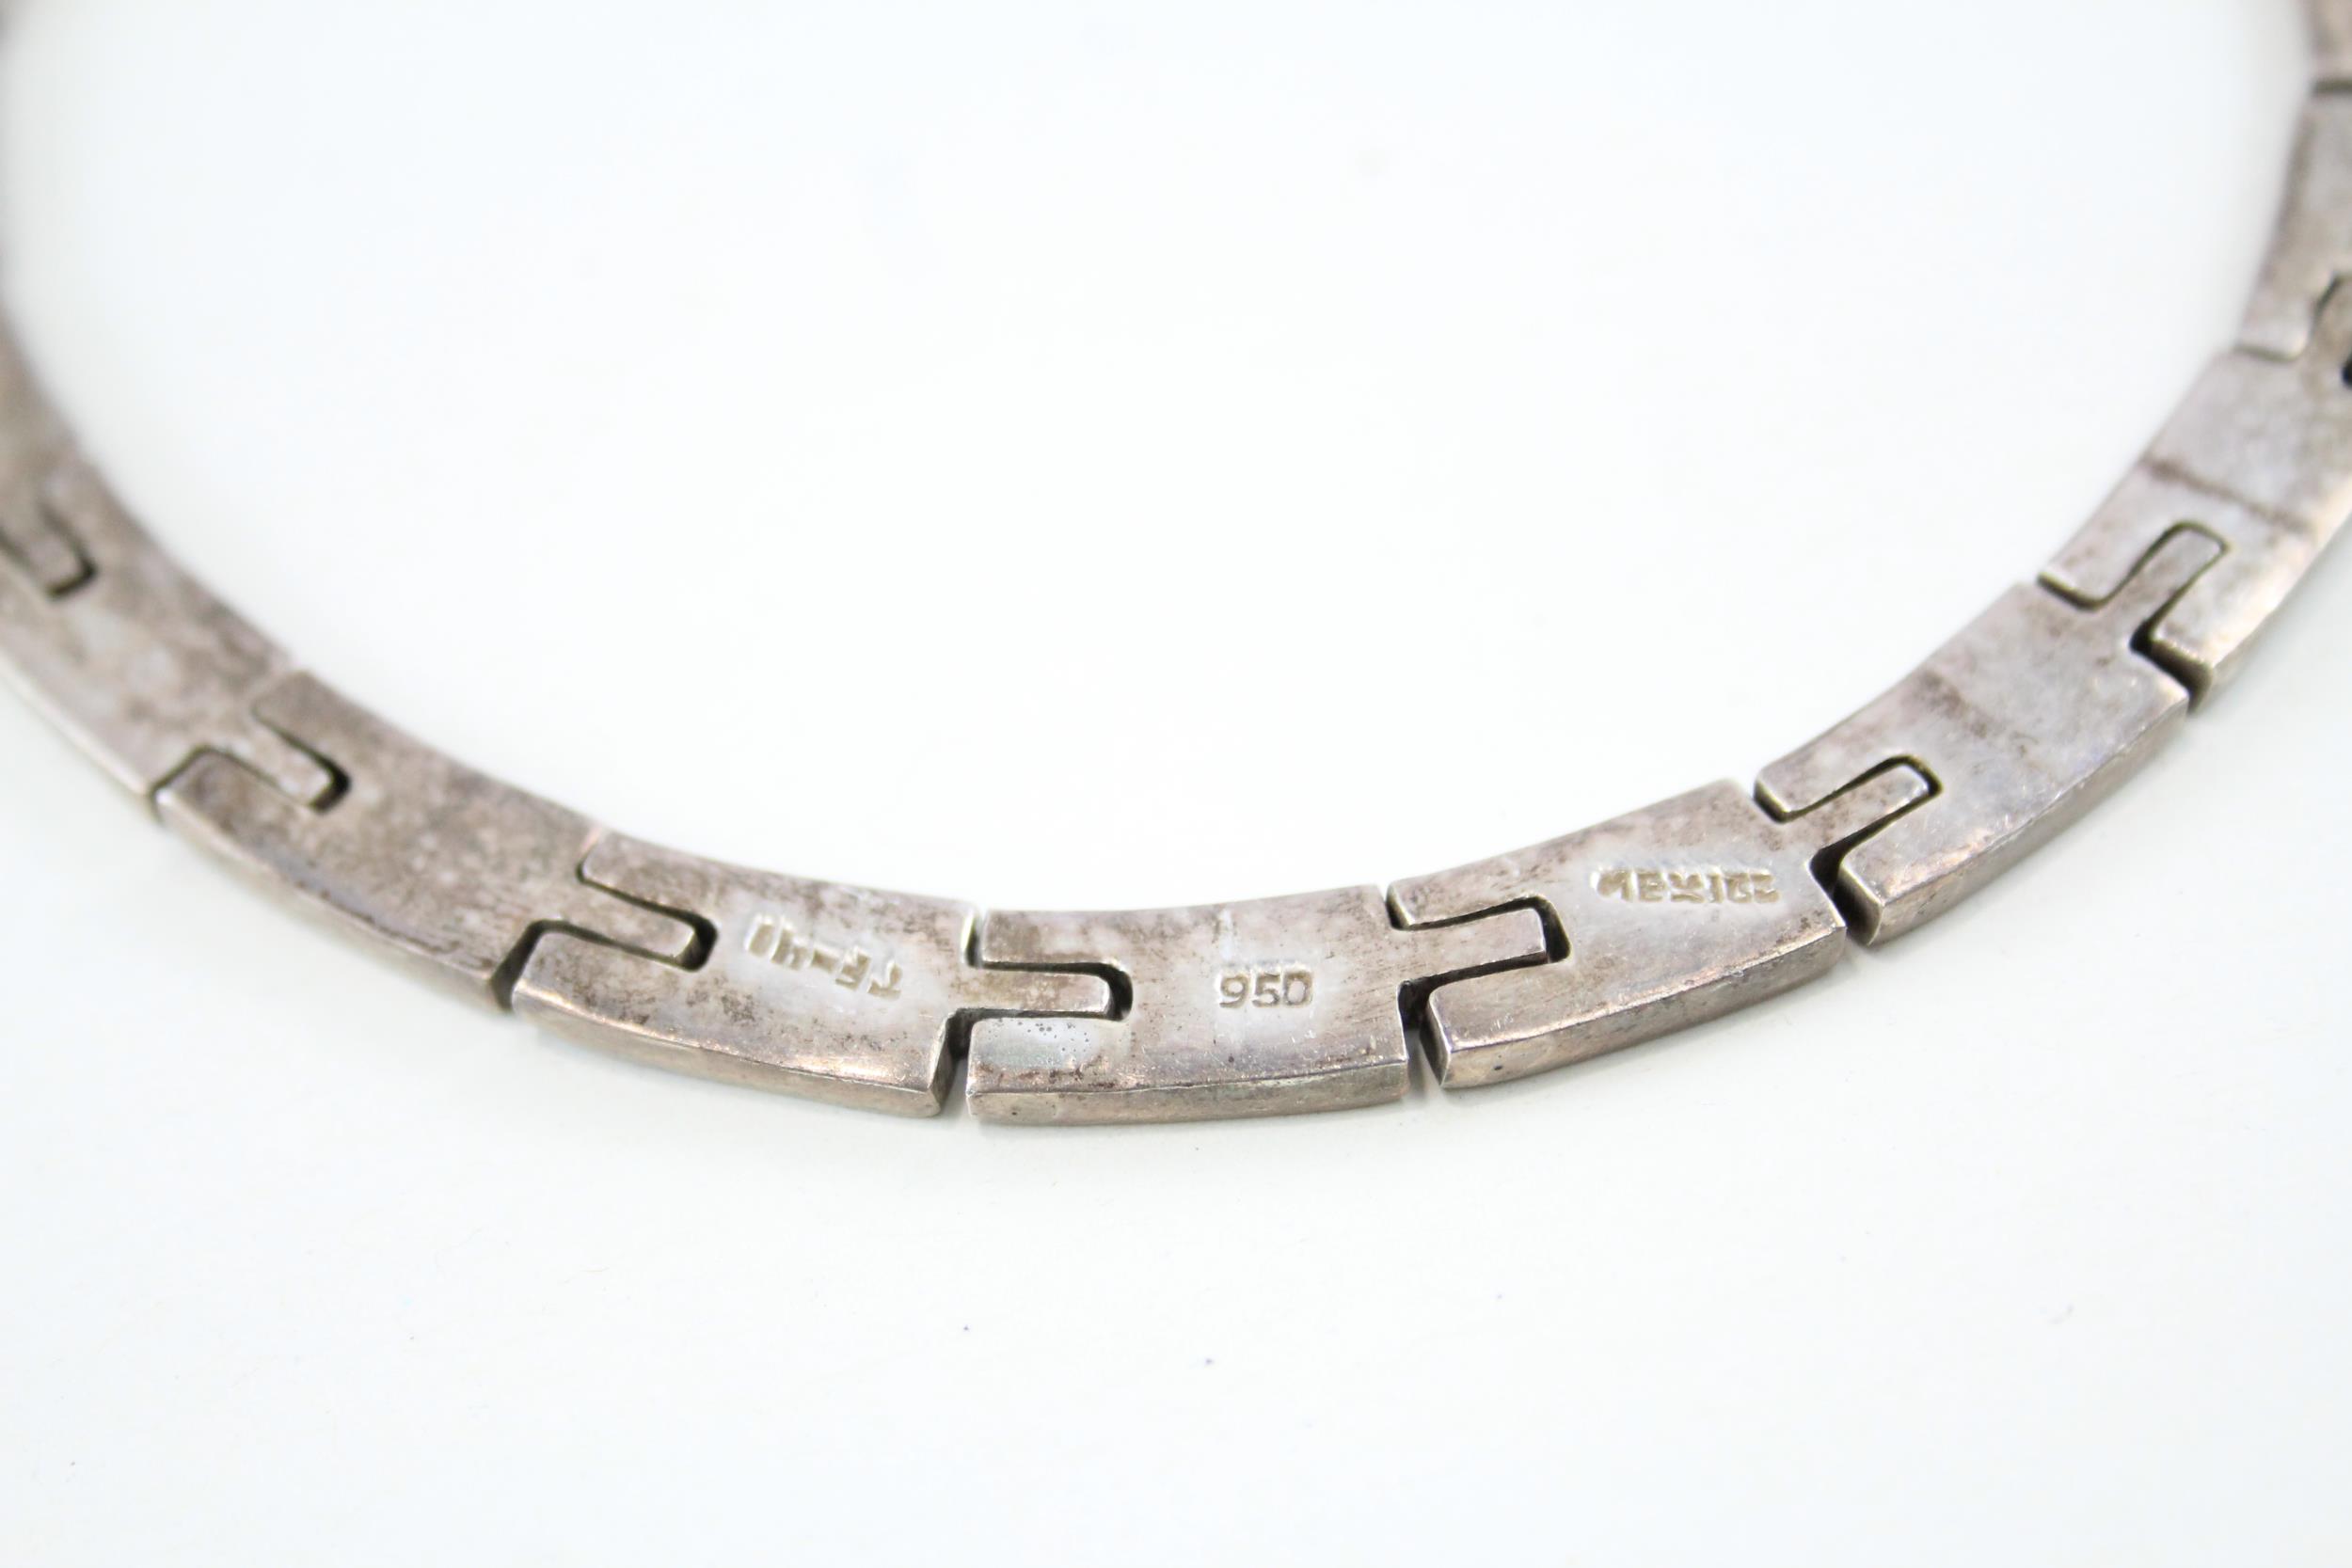 Silver Taxco Mexico collar necklace (100g) - Image 4 of 5